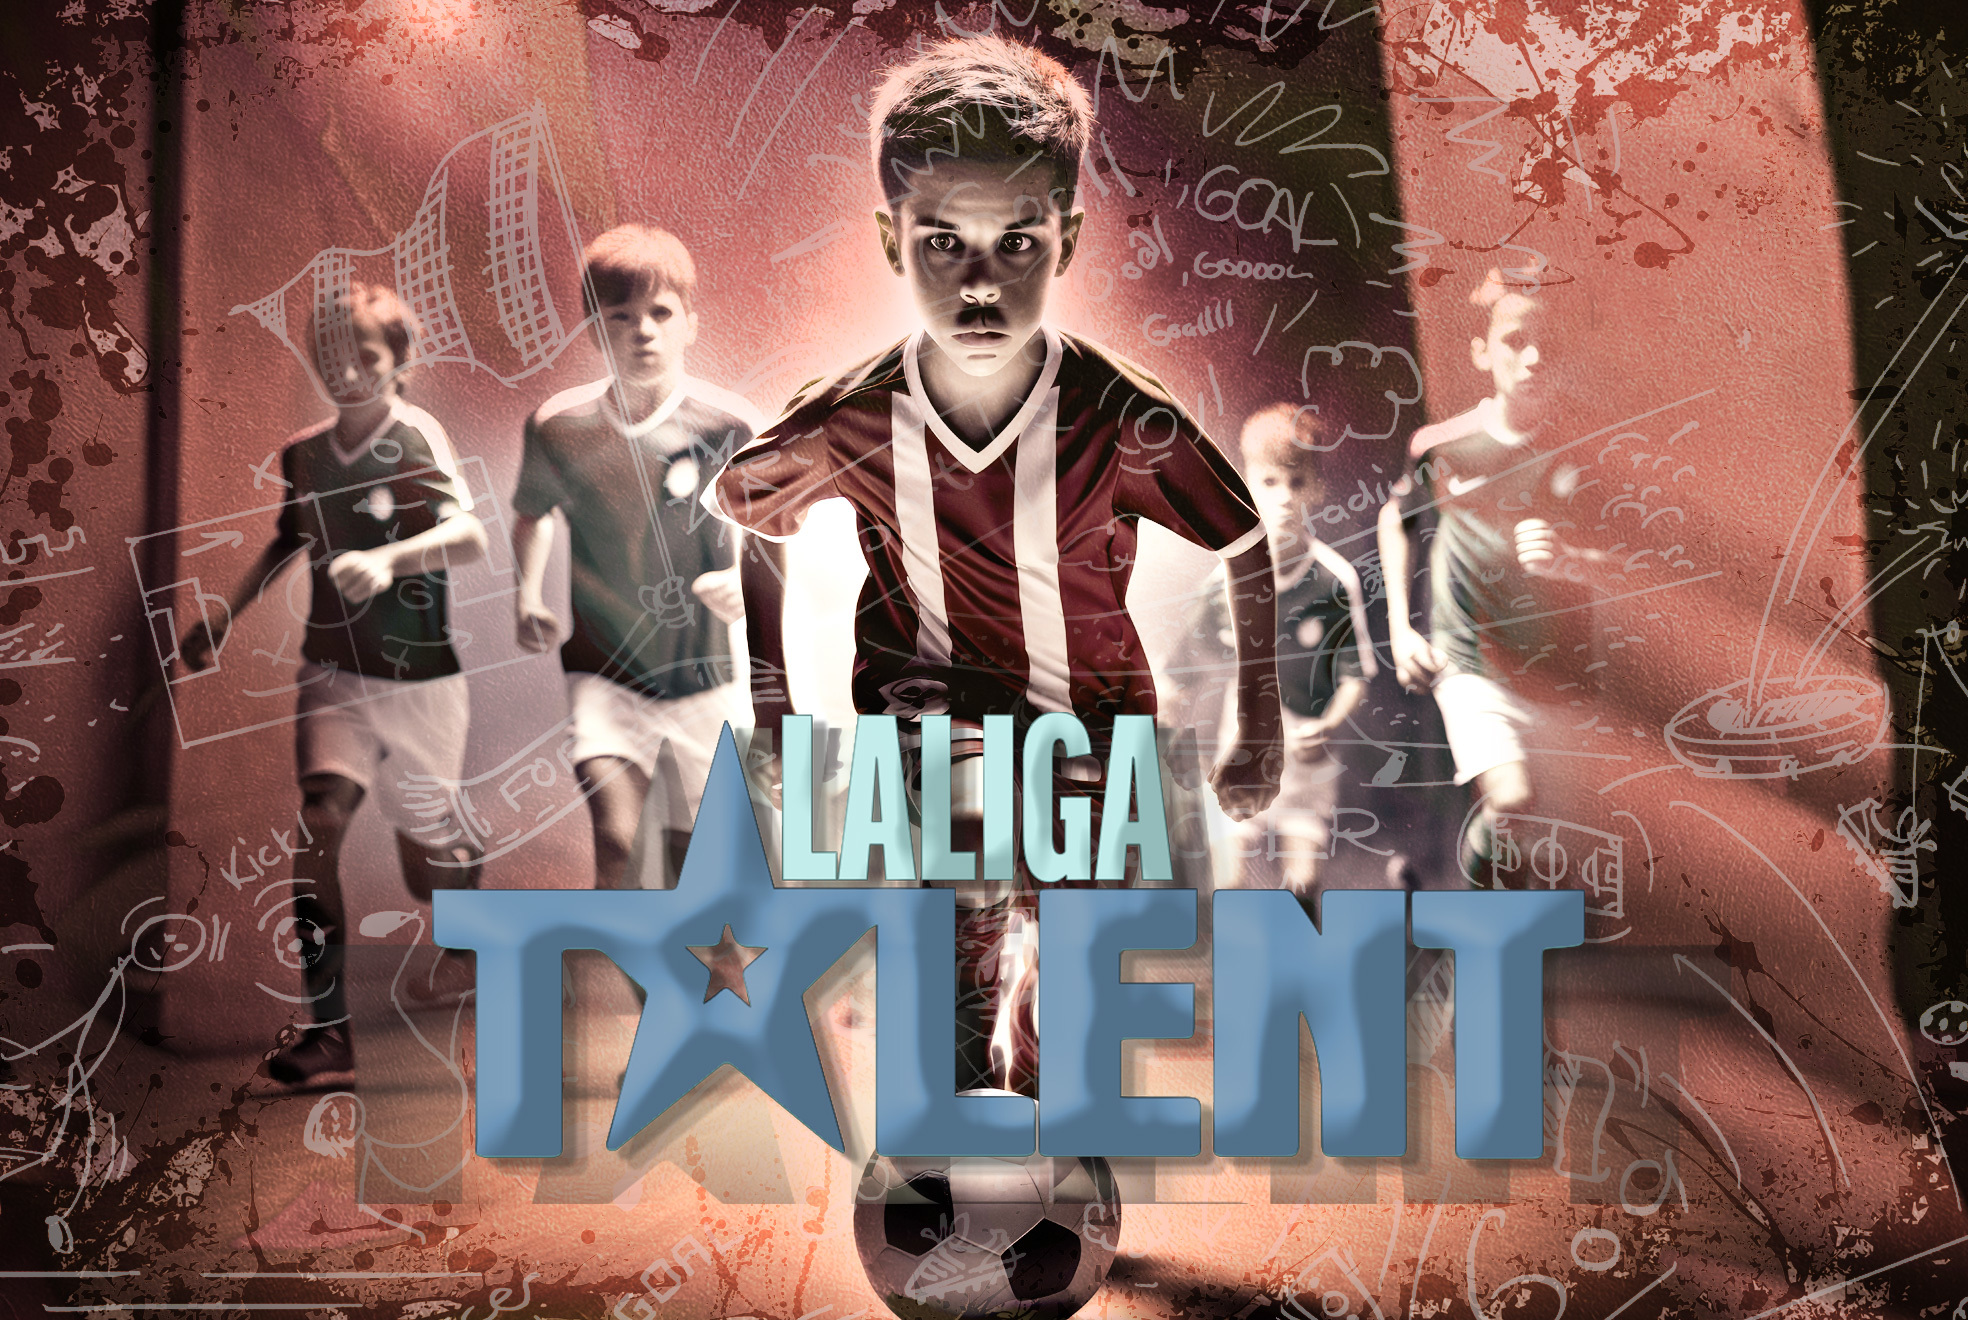 LaLiga Talent: Vive la fiebre del All Star del fútbol en el MARCA Sport Weekend